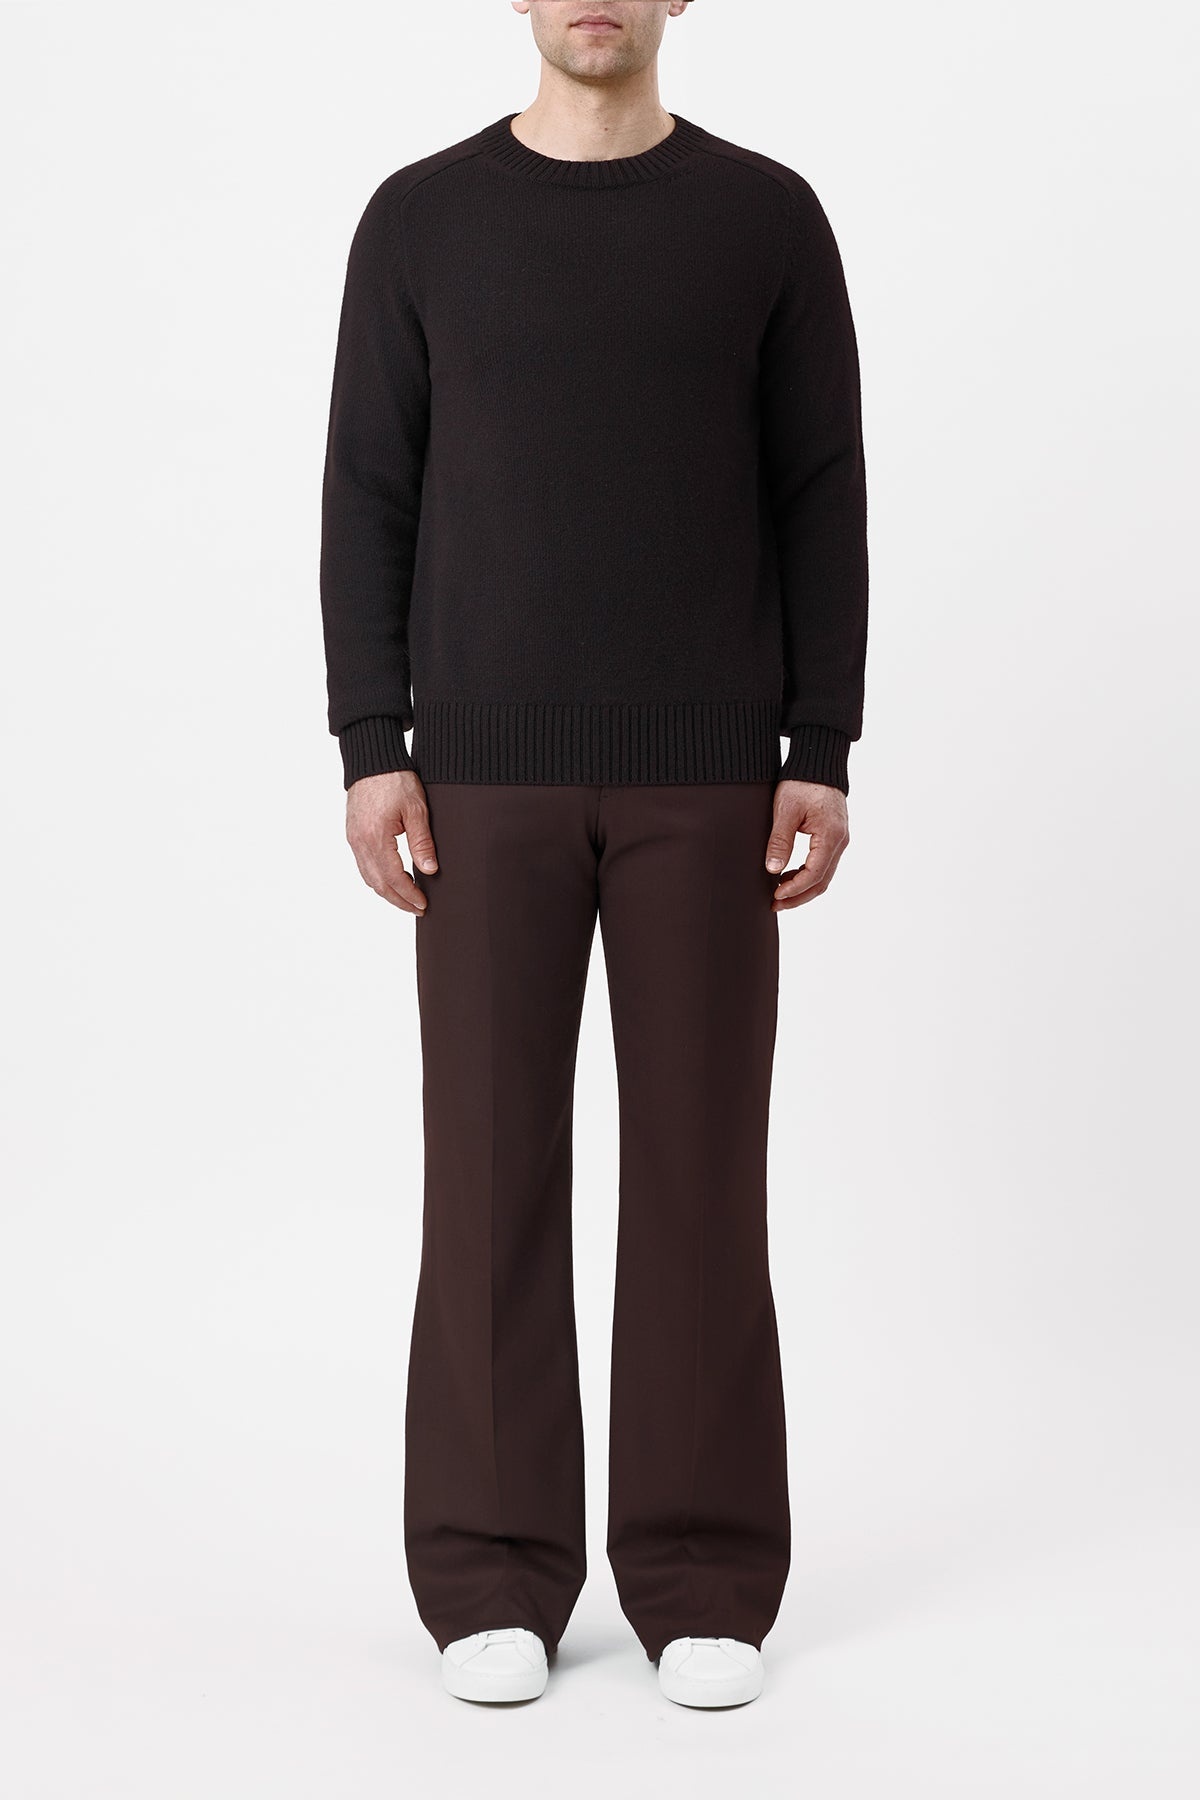 Daniel Knit Sweater in Chocolate Cashmere - 2